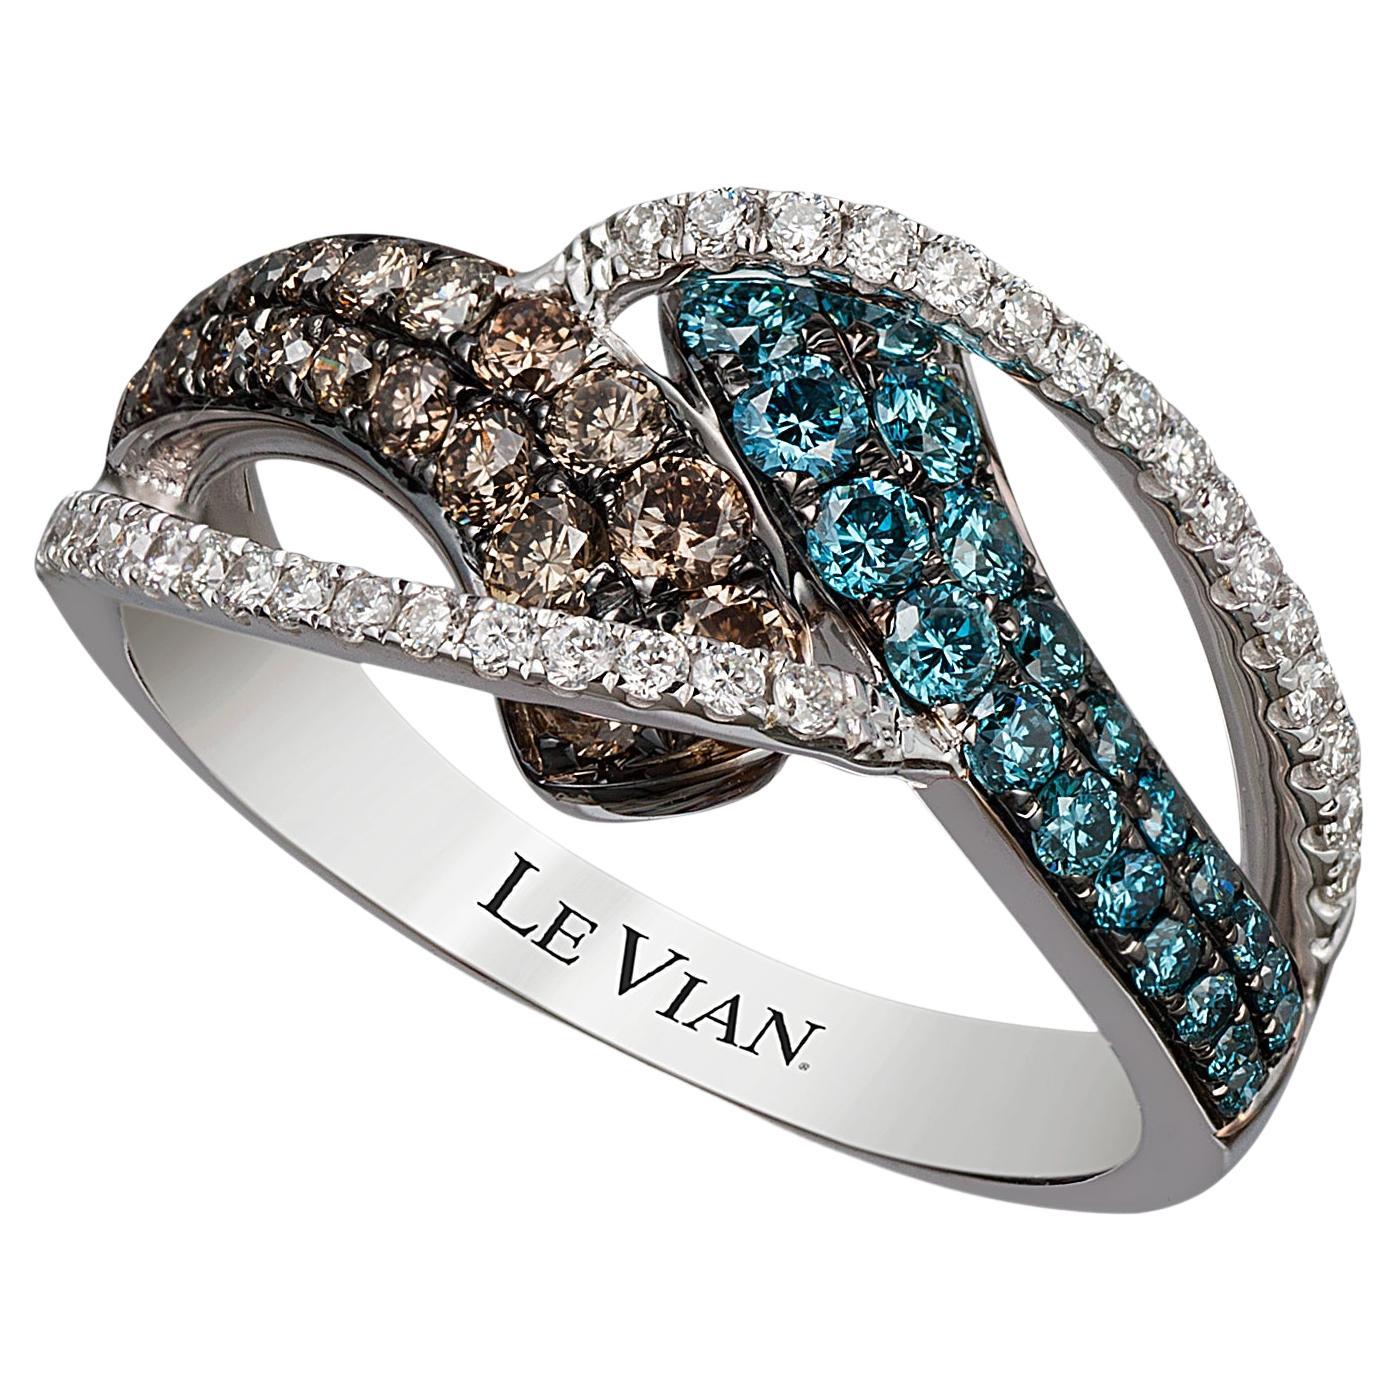 Levian Bague en or blanc 14 carats avec diamants naturels bleus chocolat et blancs de 7 8 carats